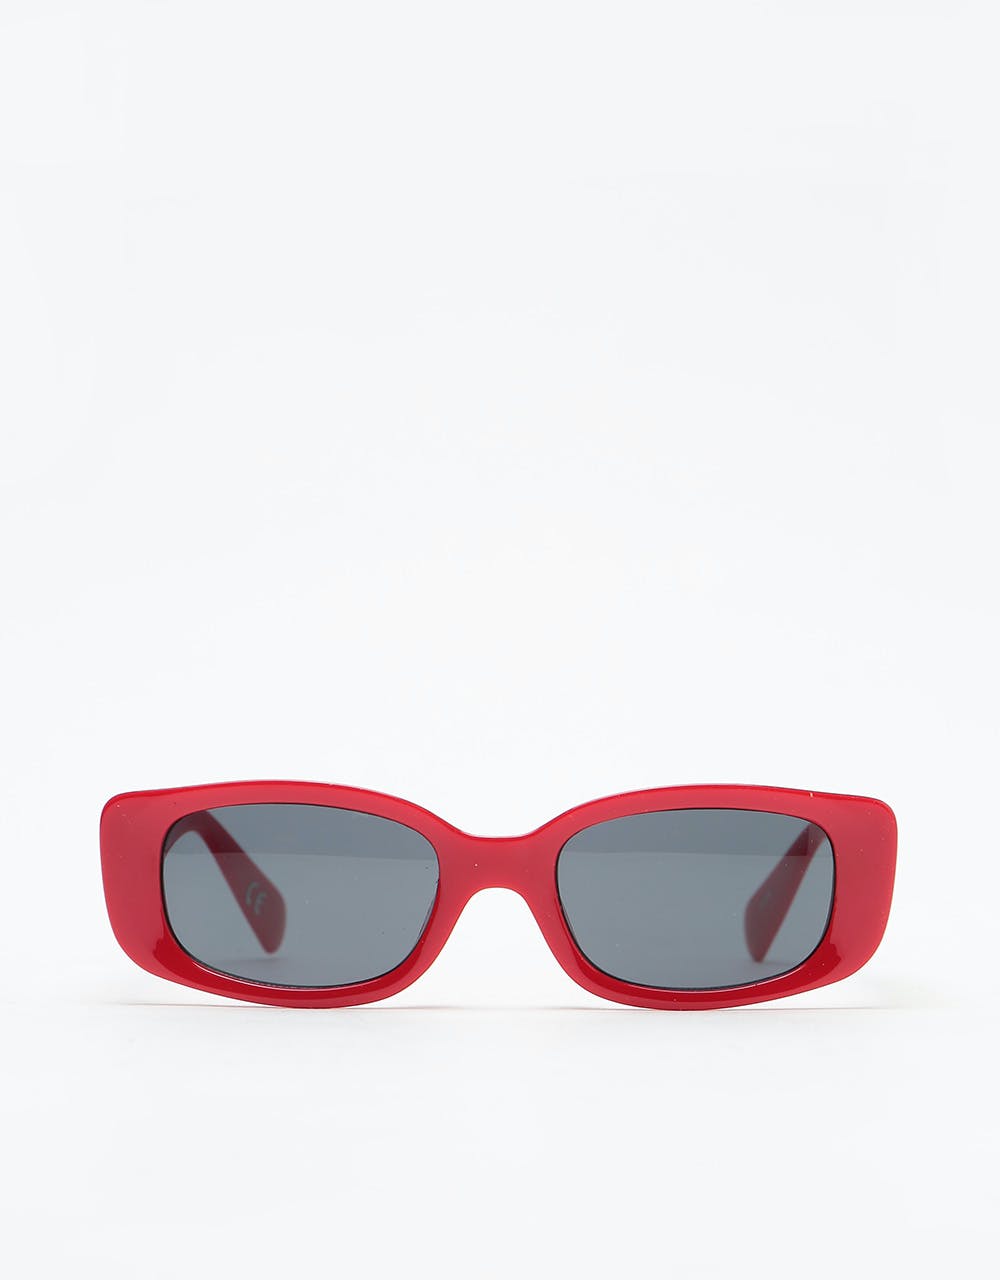 Vans Bomb Sunglasses - Racing Red